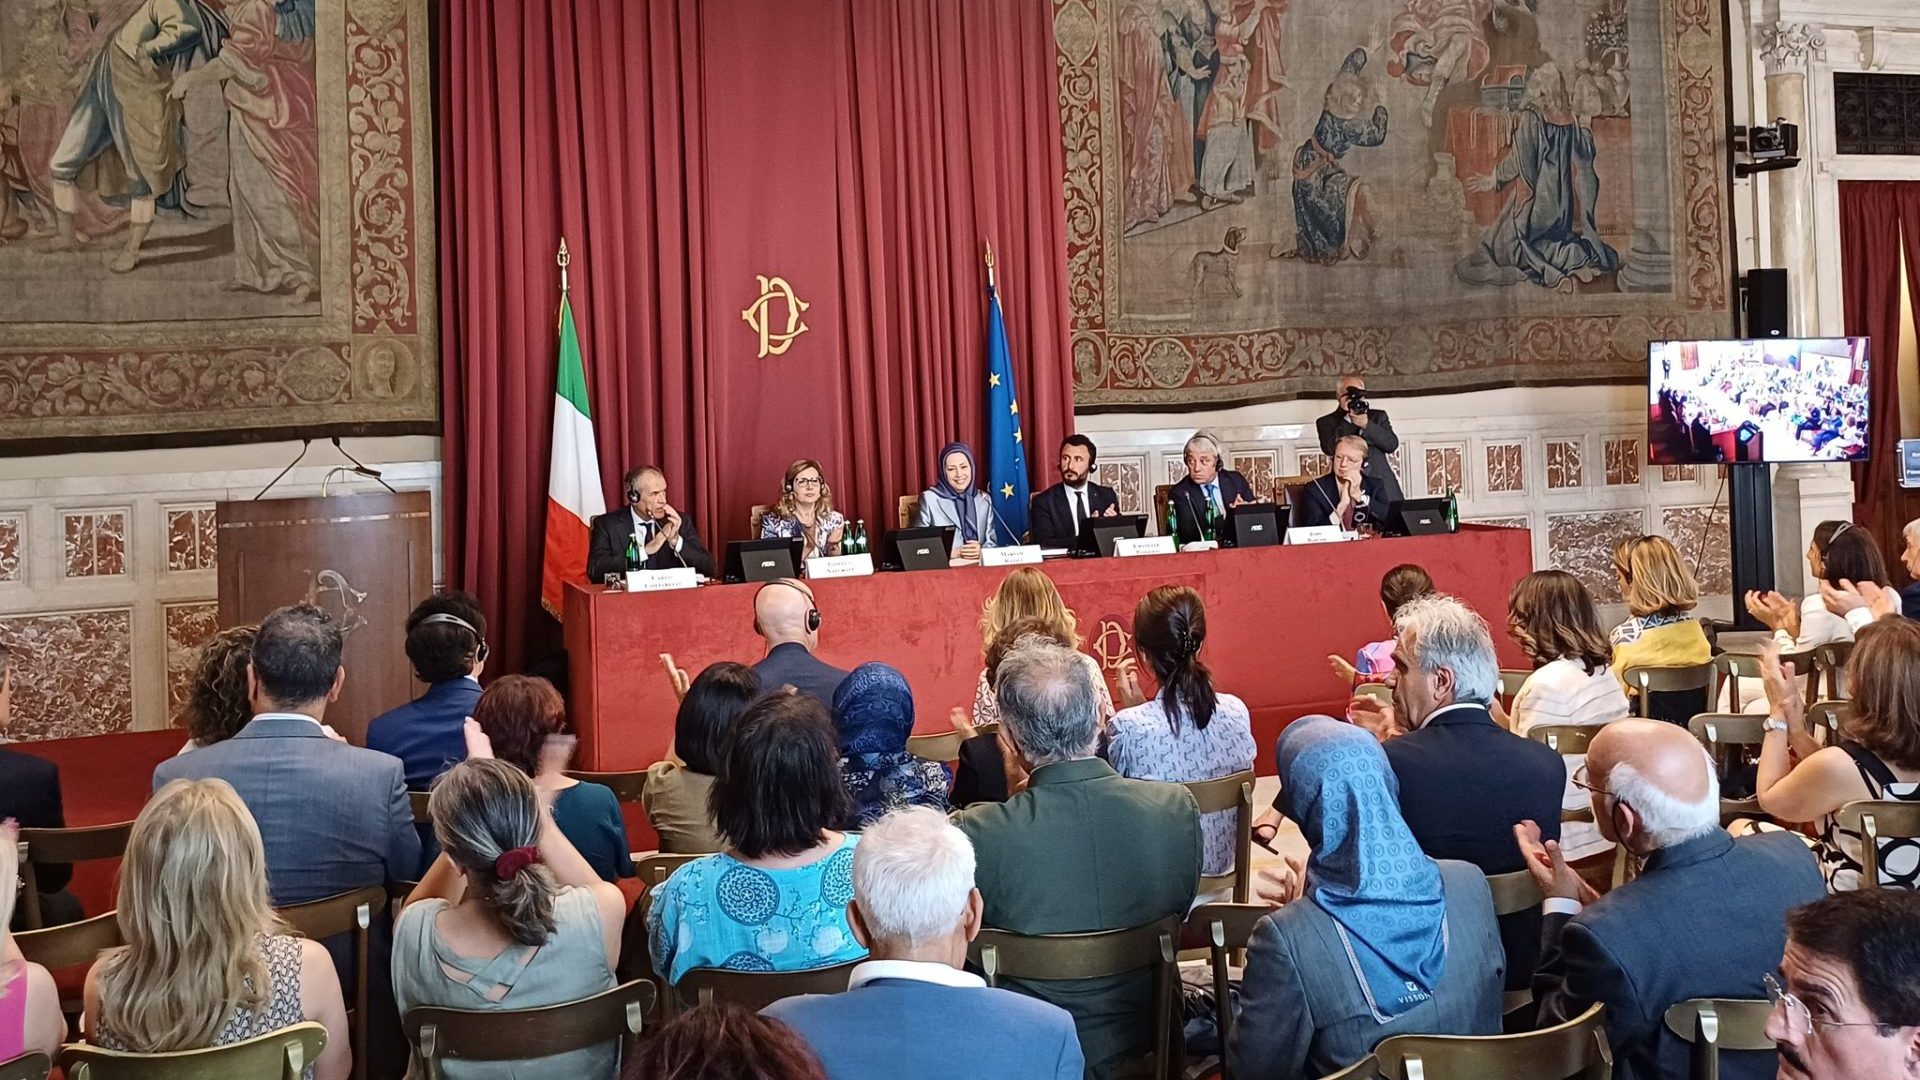 NCRI President-elect Maryam Rajavi in Italy’s parliament